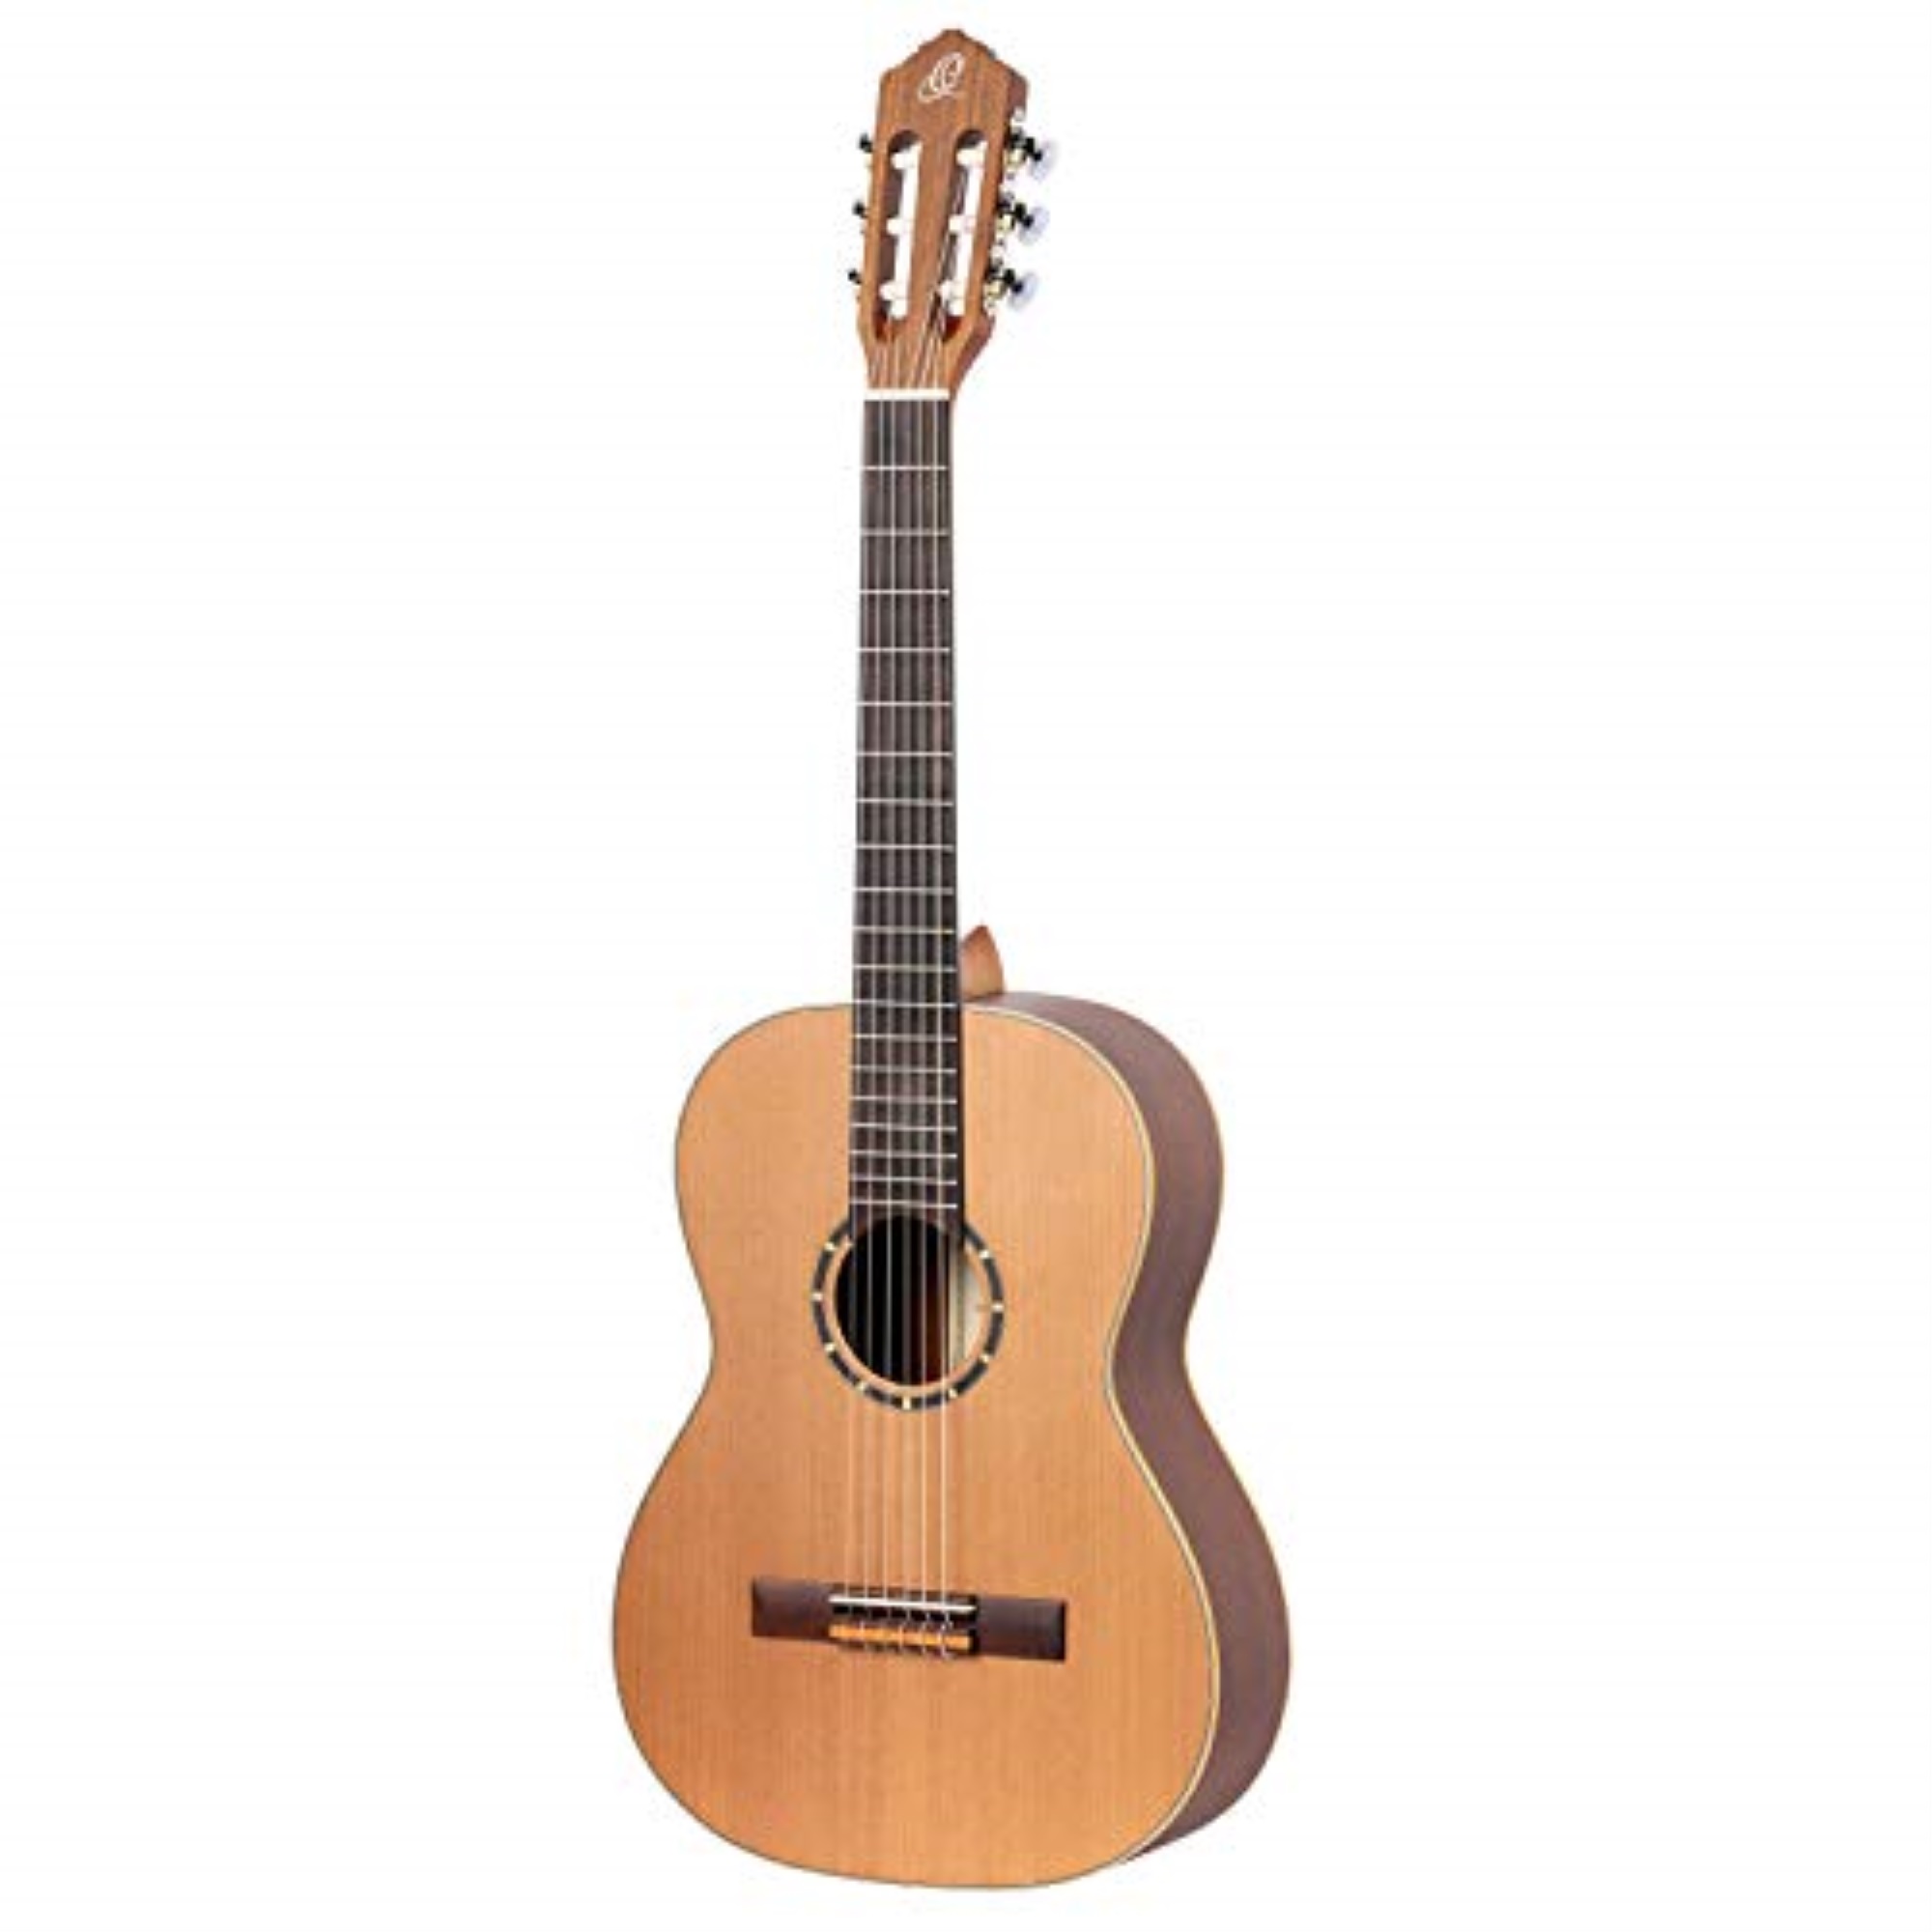 Ortega Guitars Family Series 7/8 Size Left-Handed Nylon Classical Guitar with Bag